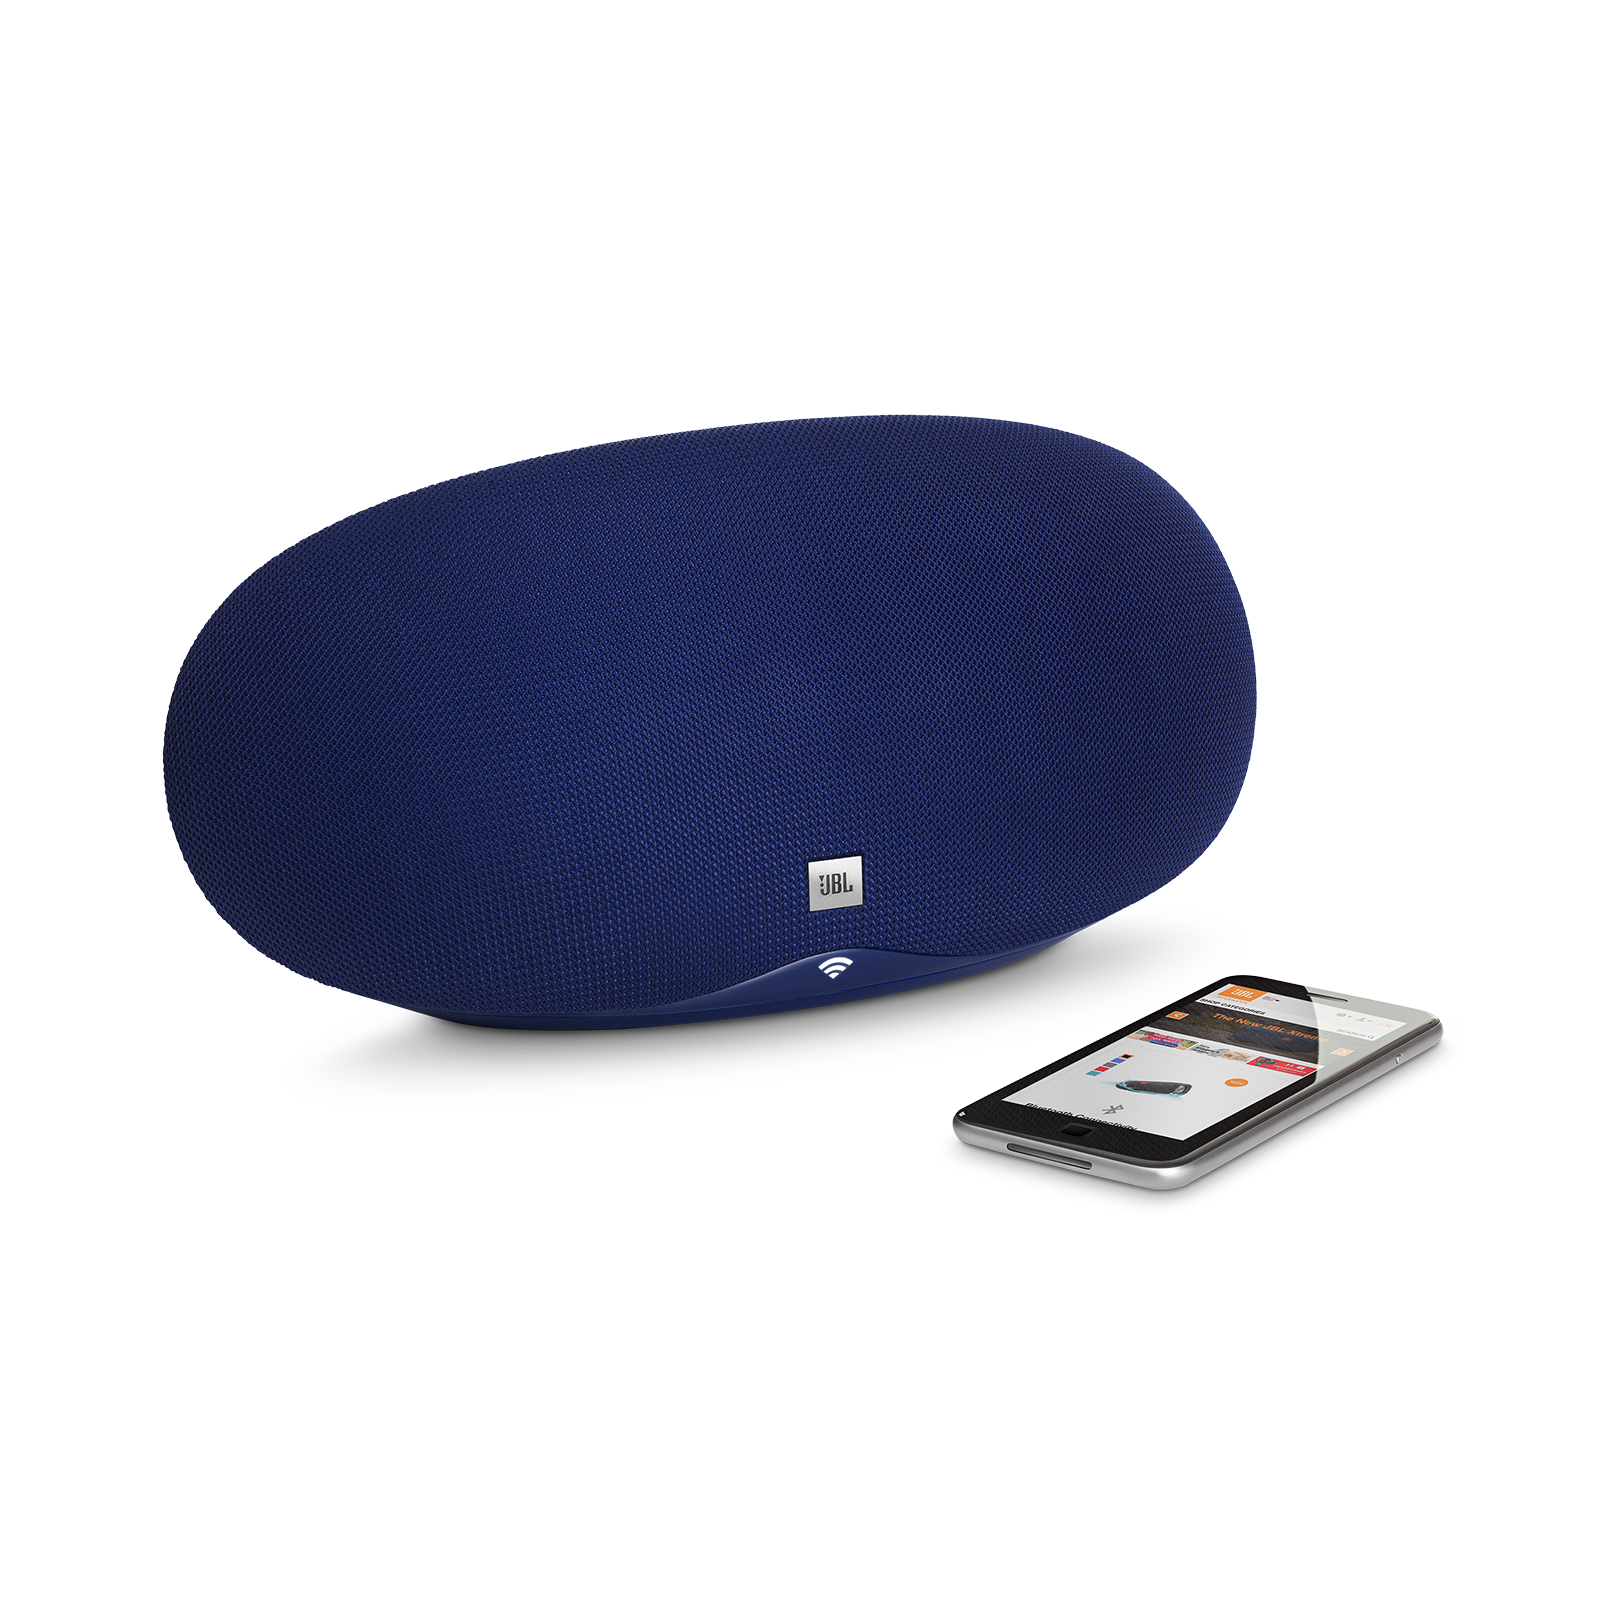 JBL Playlist - Blue - Wireless speaker with Chromecast built-in - Detailshot 1